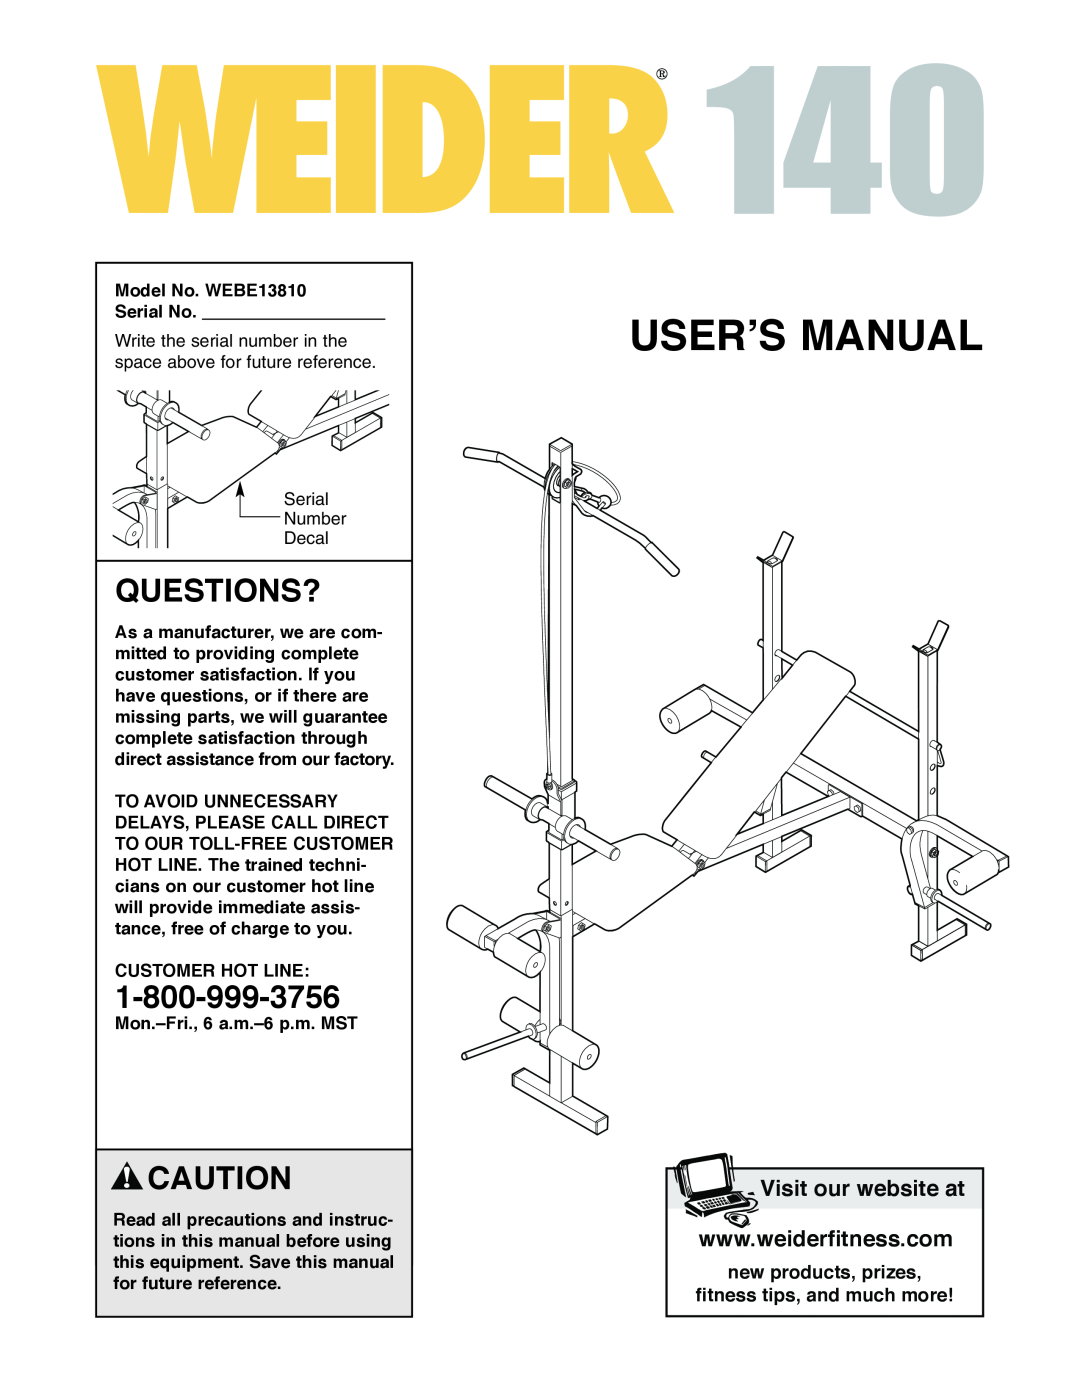 Weslo user manual Questions?, Model No. WEBE13810 Serial No, Customer Hot Line, Mon.-Fri., 6 a.m.-6 p.m. MST 